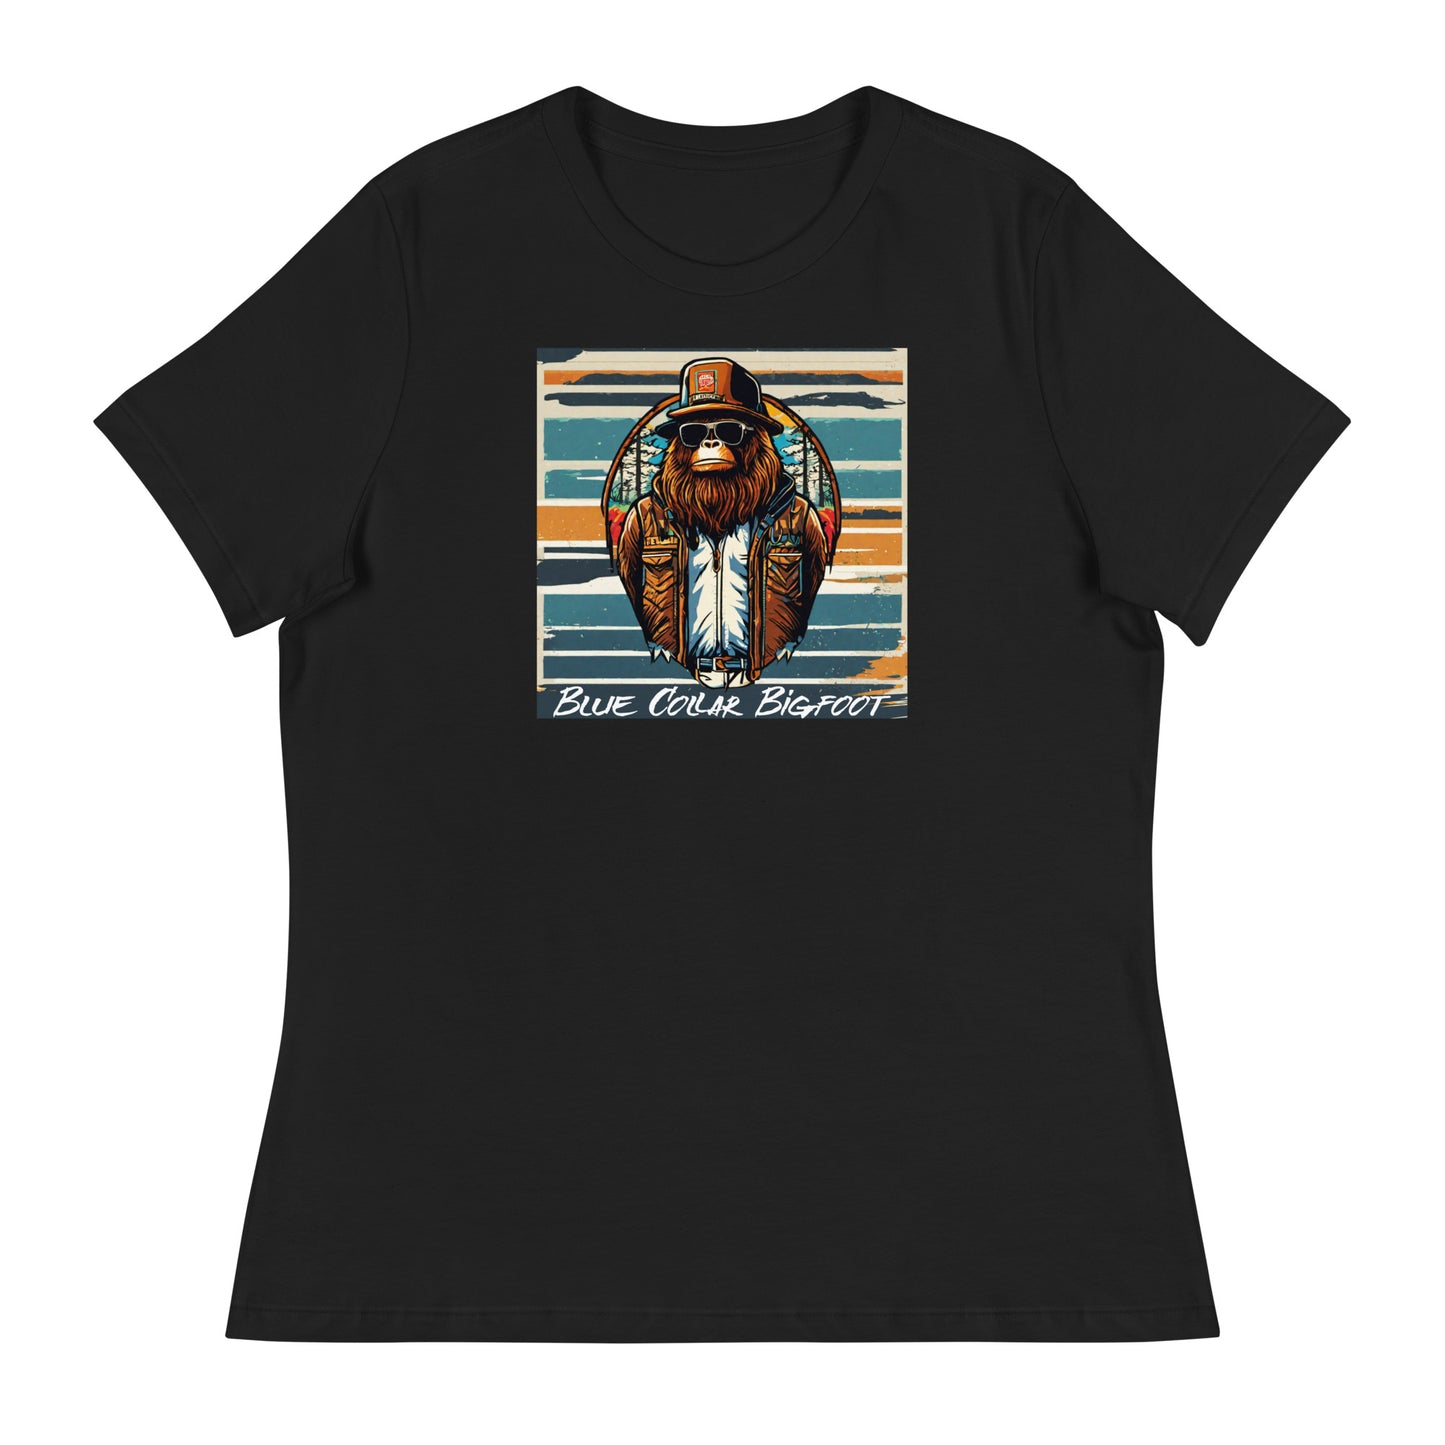 Blue-Collar Bigfoot Women's Graphic T-Shirt Black